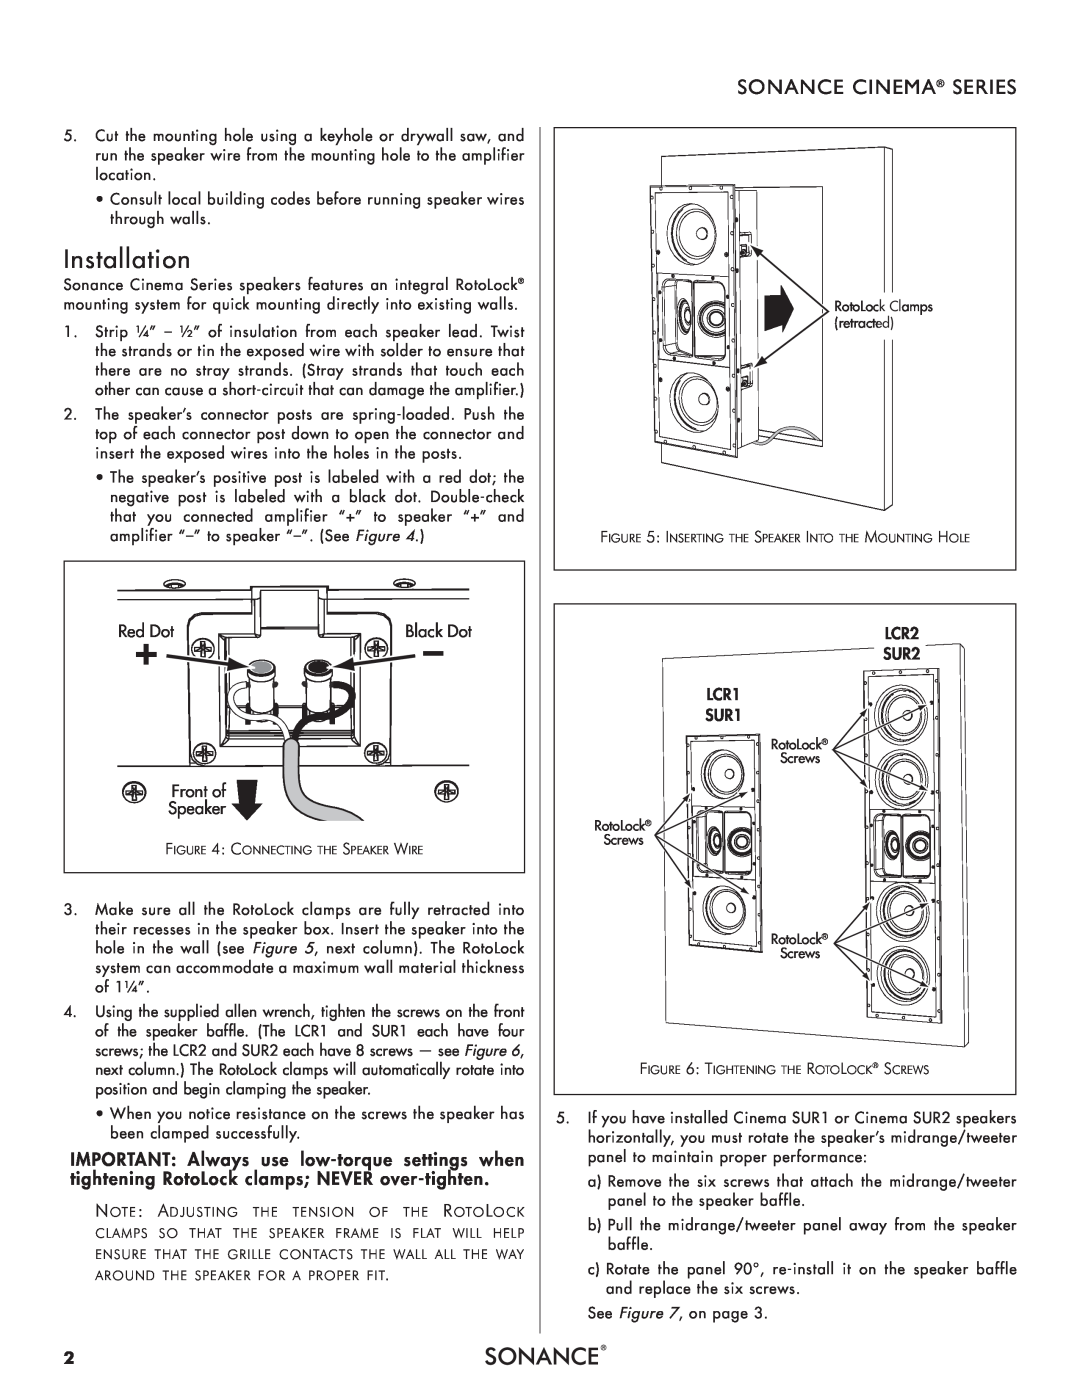 Sonance 91652 instruction manual Installation, Sonance Cinema Series, Front of, Speaker 